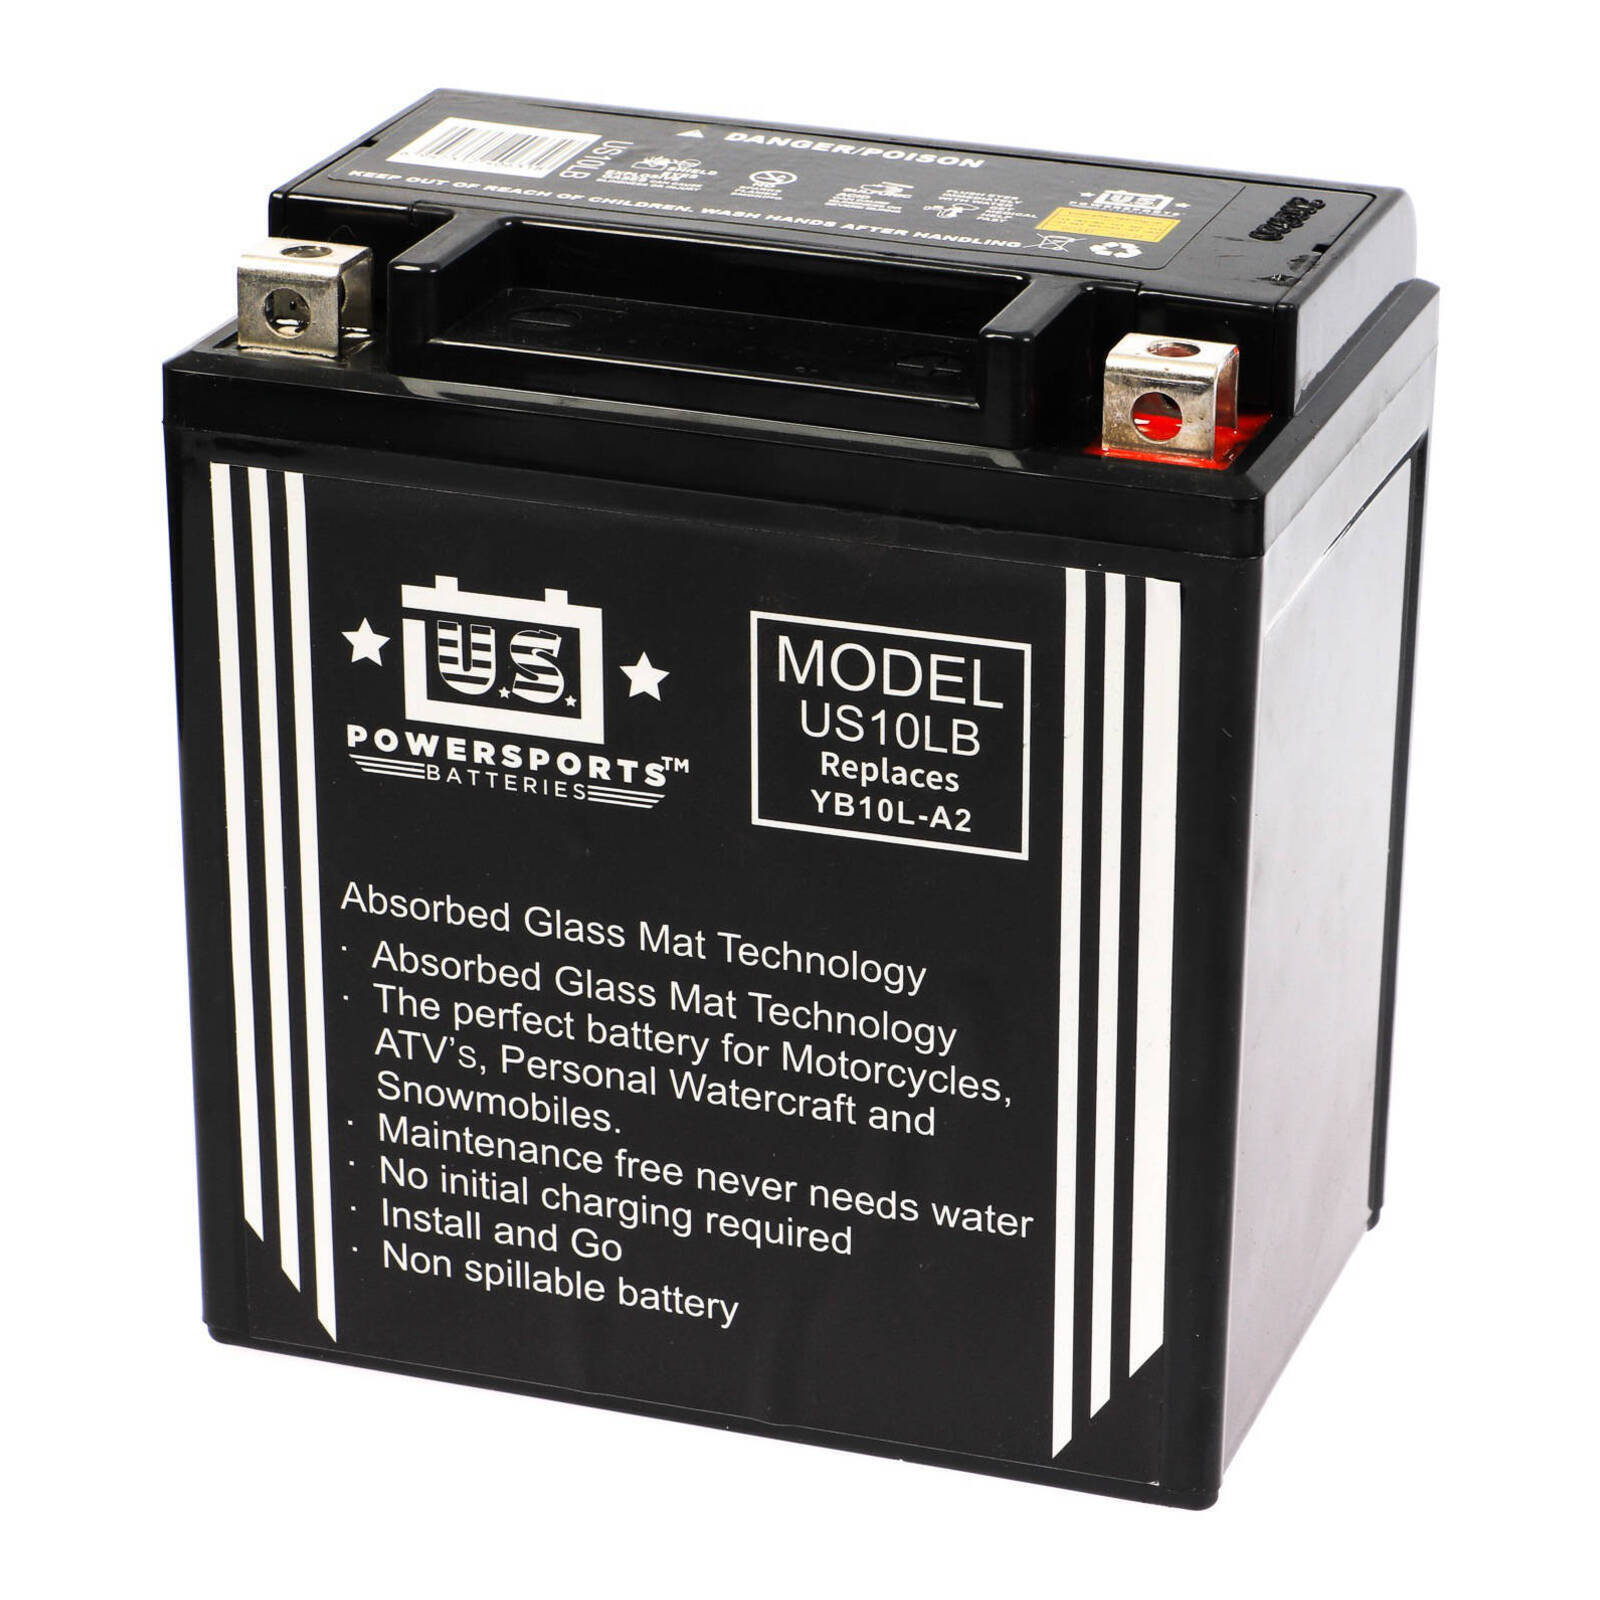 USPS AGM Battery - US10LB